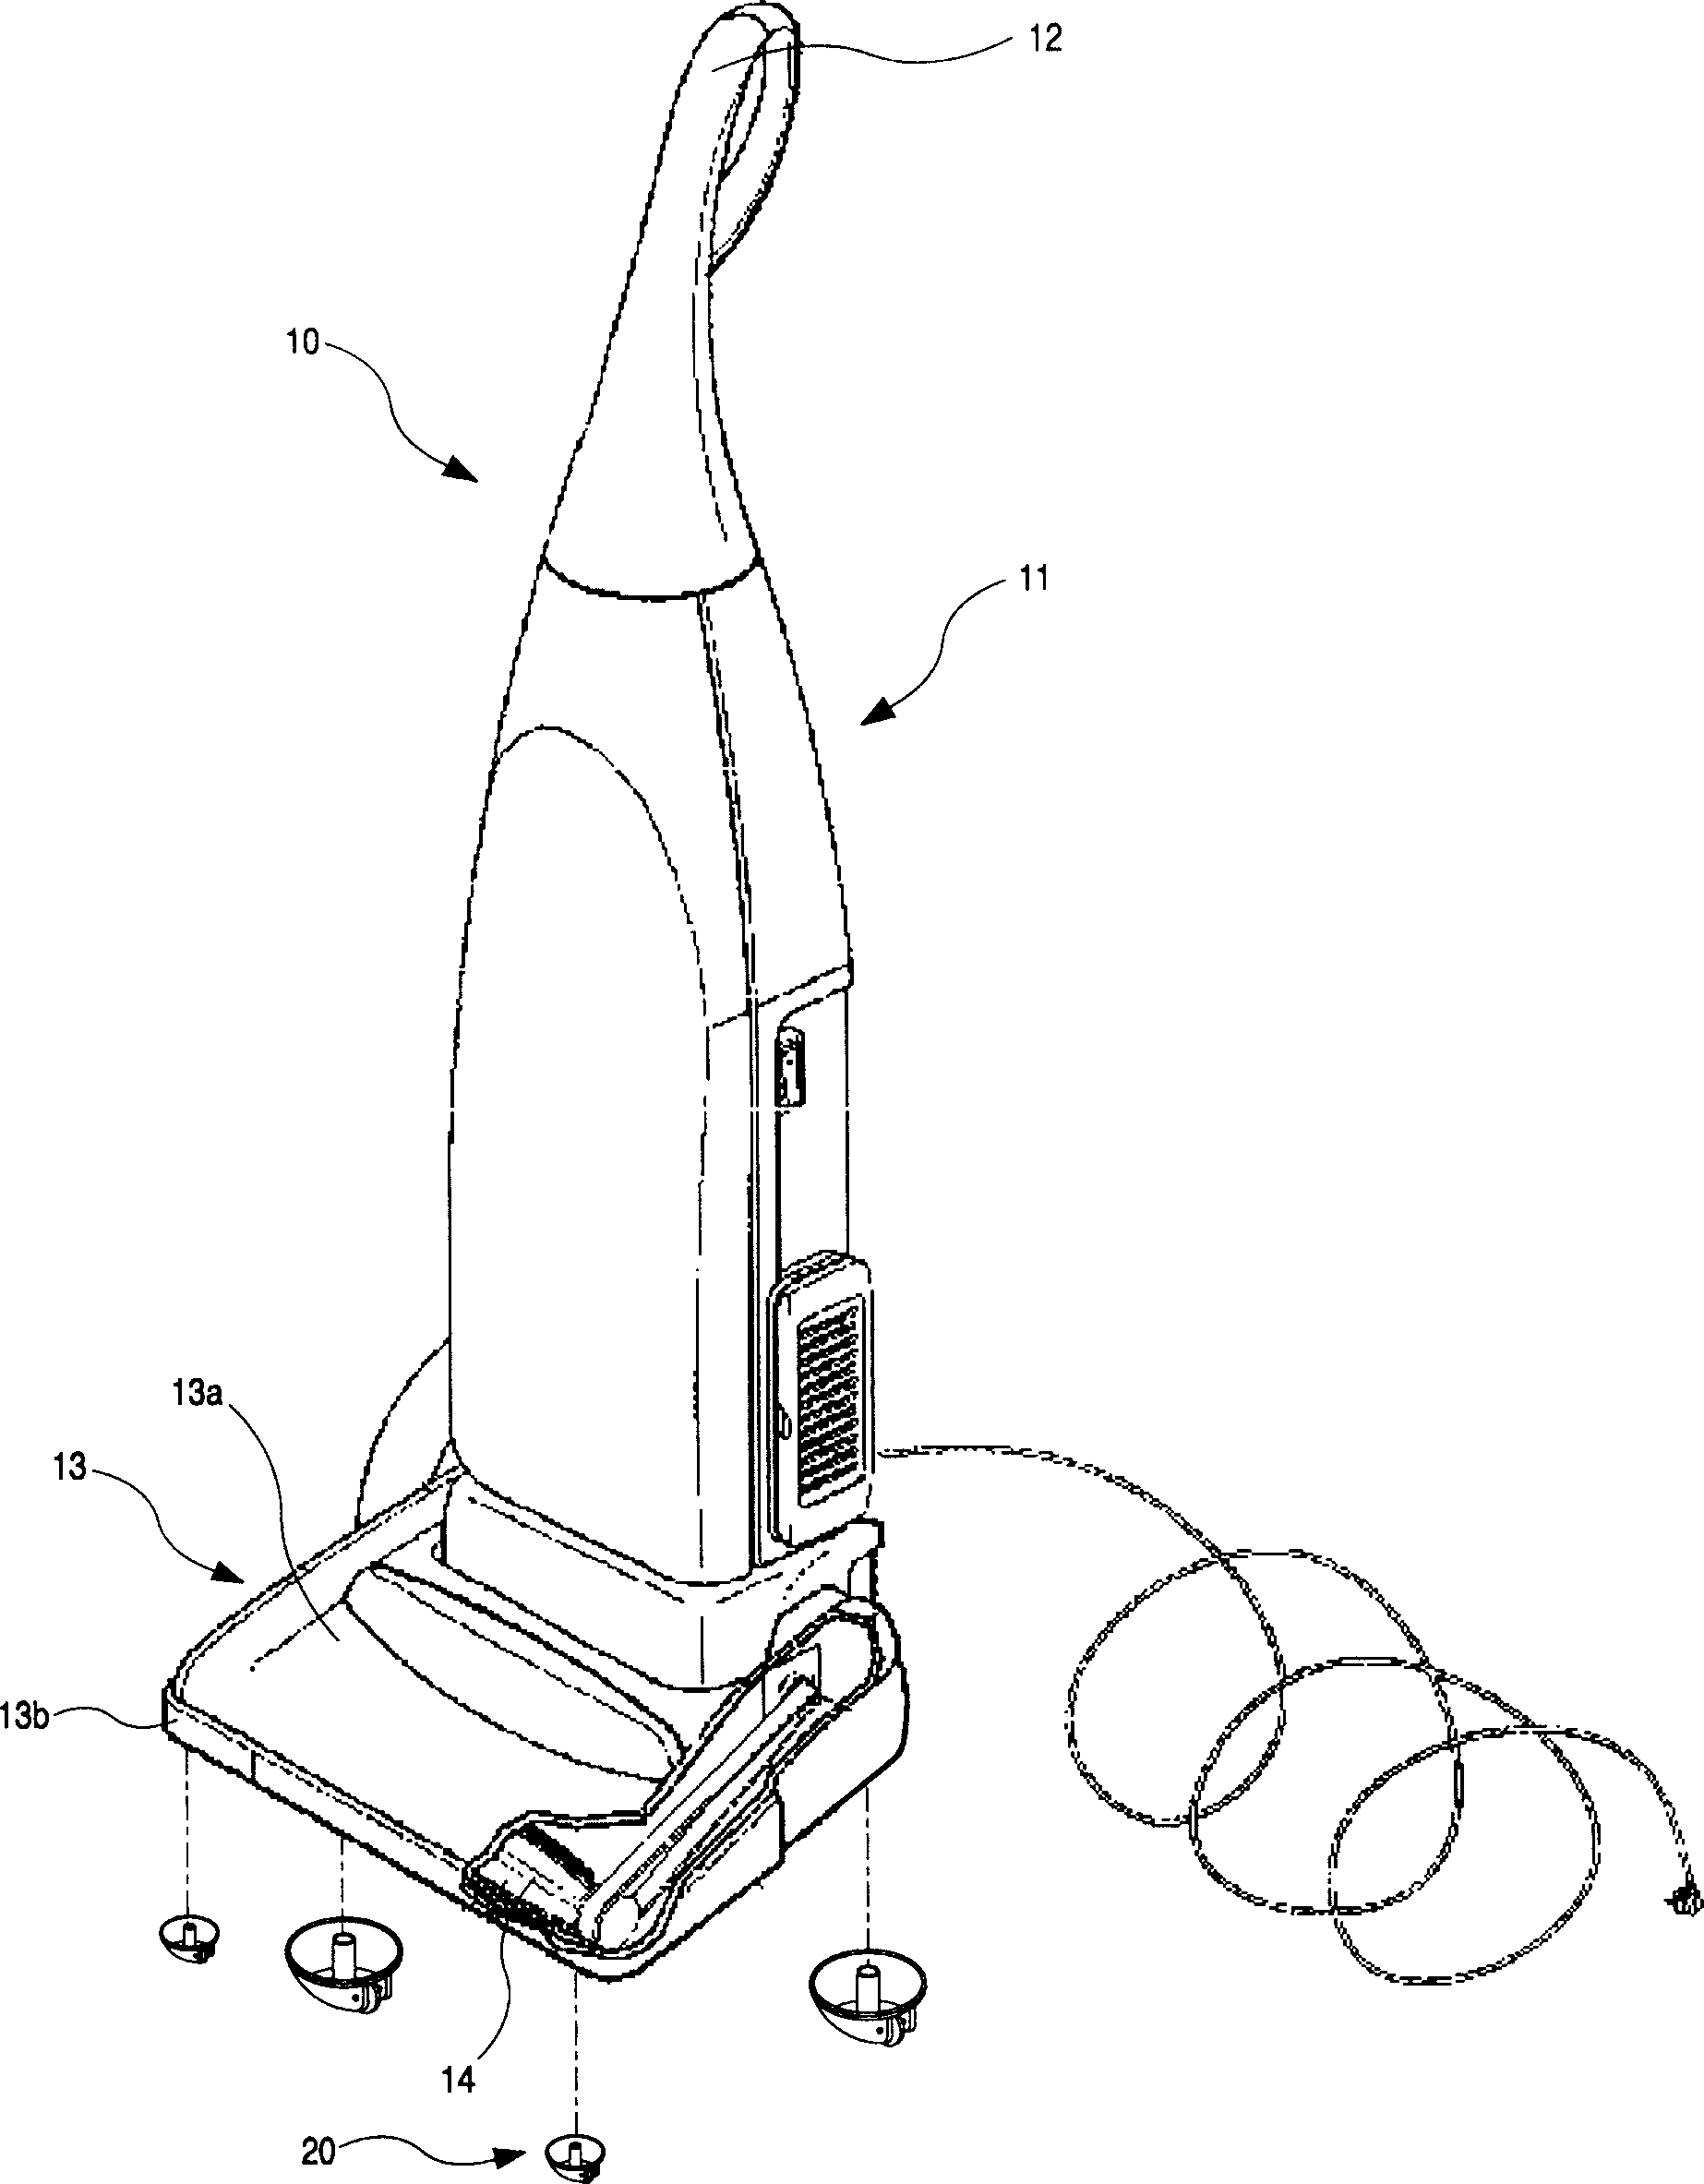 Direction conversion apparatus of vertical vacuum cleaner